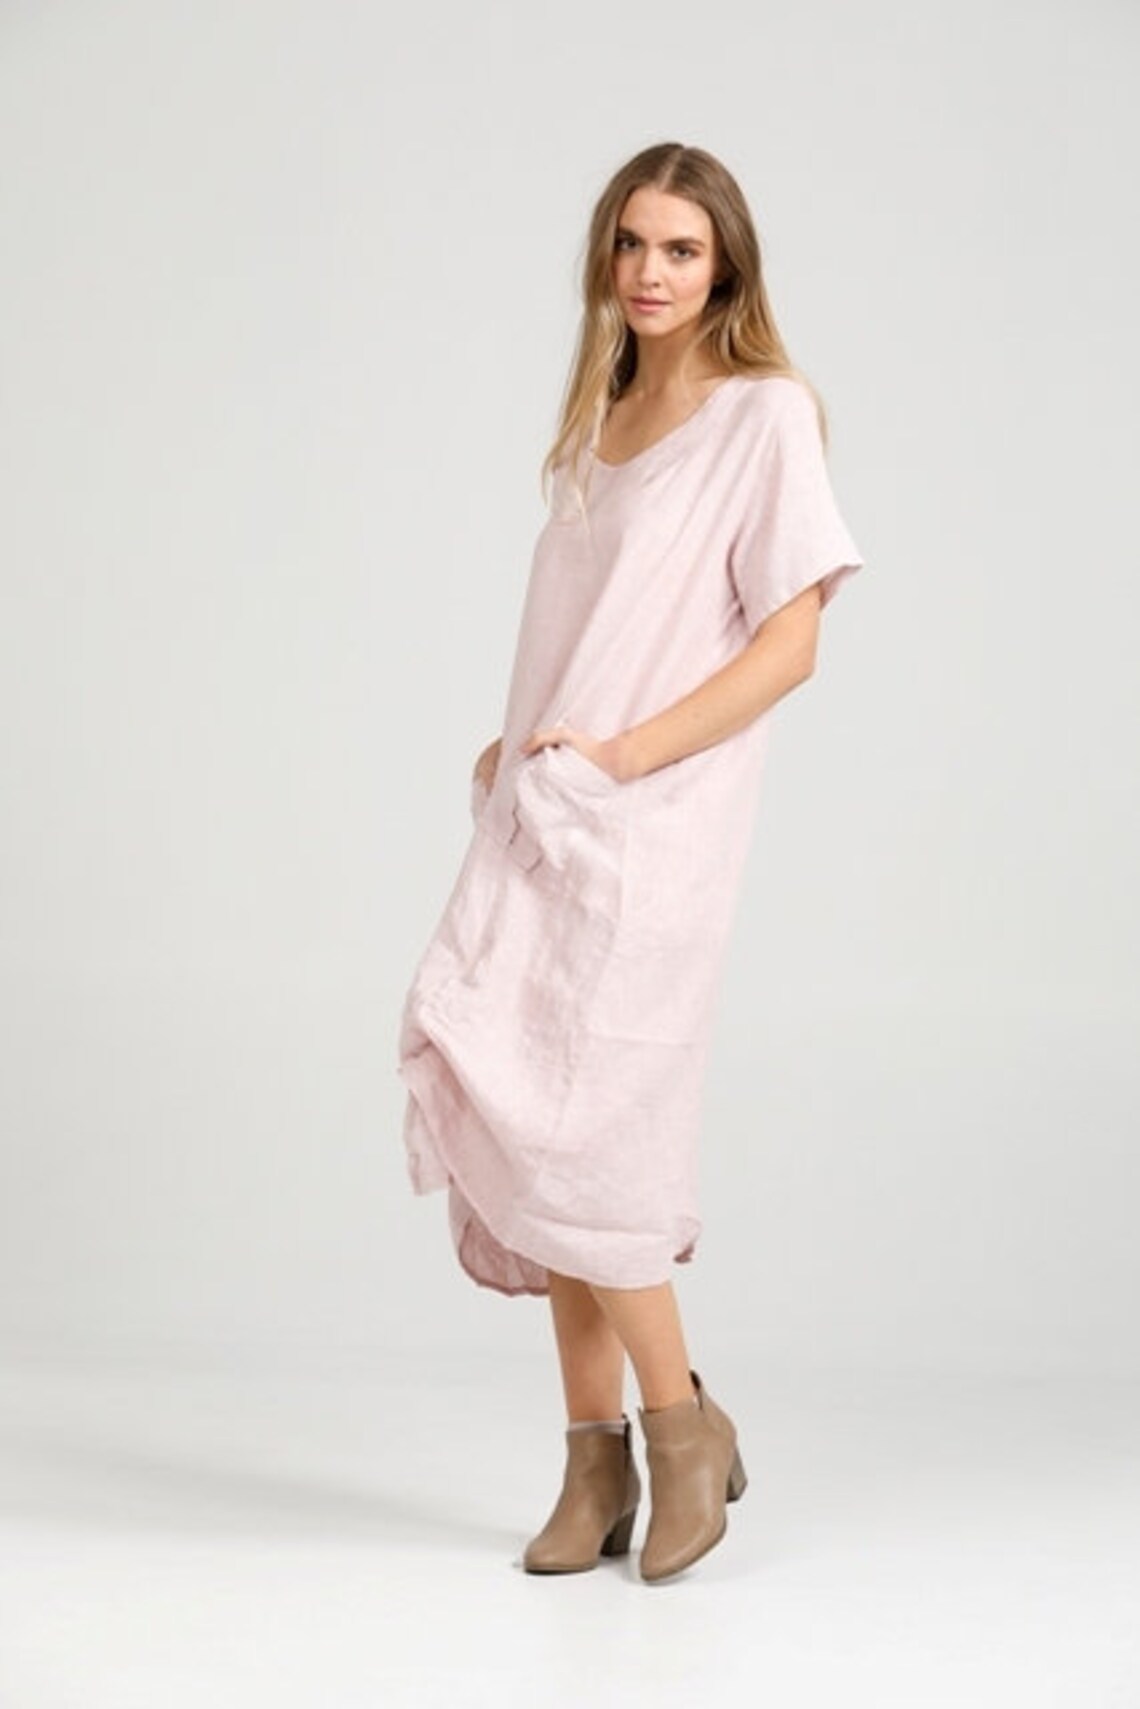 Linen Ruched Dress. Primavera Linen Dress in Blush. Scalloped | Etsy ...